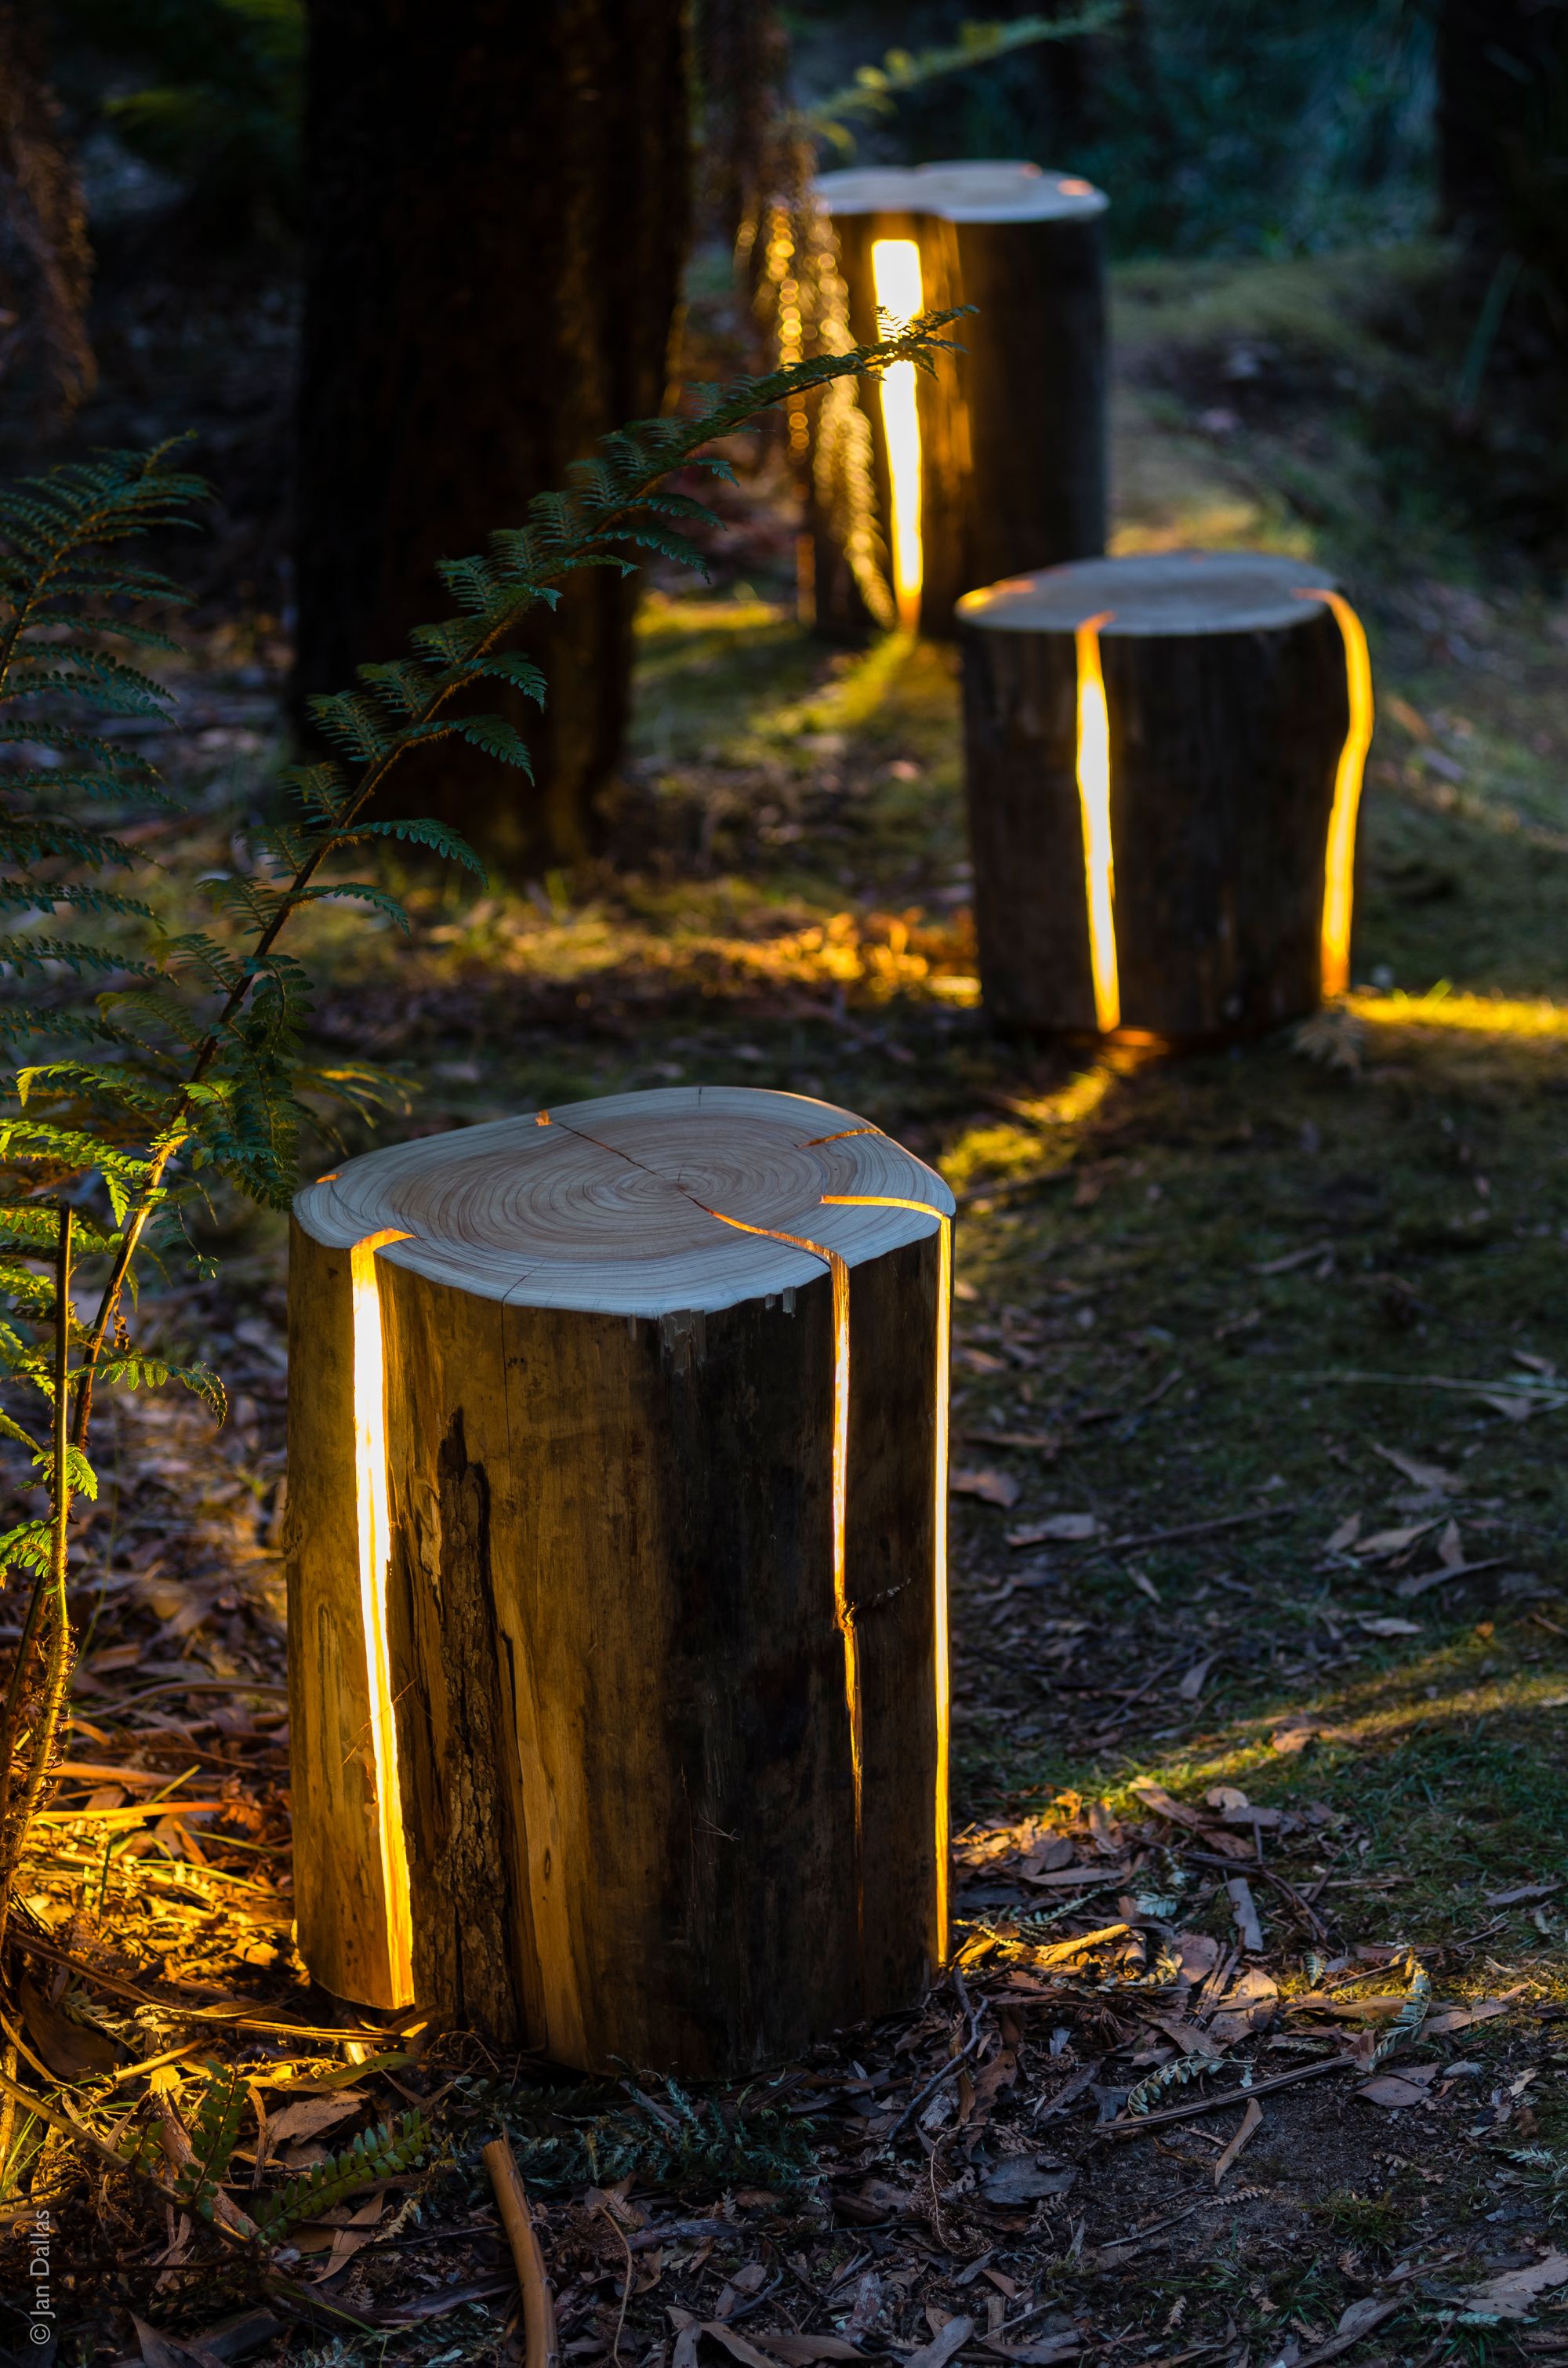 Duncan Meerding's Stump Light located on the forest floor